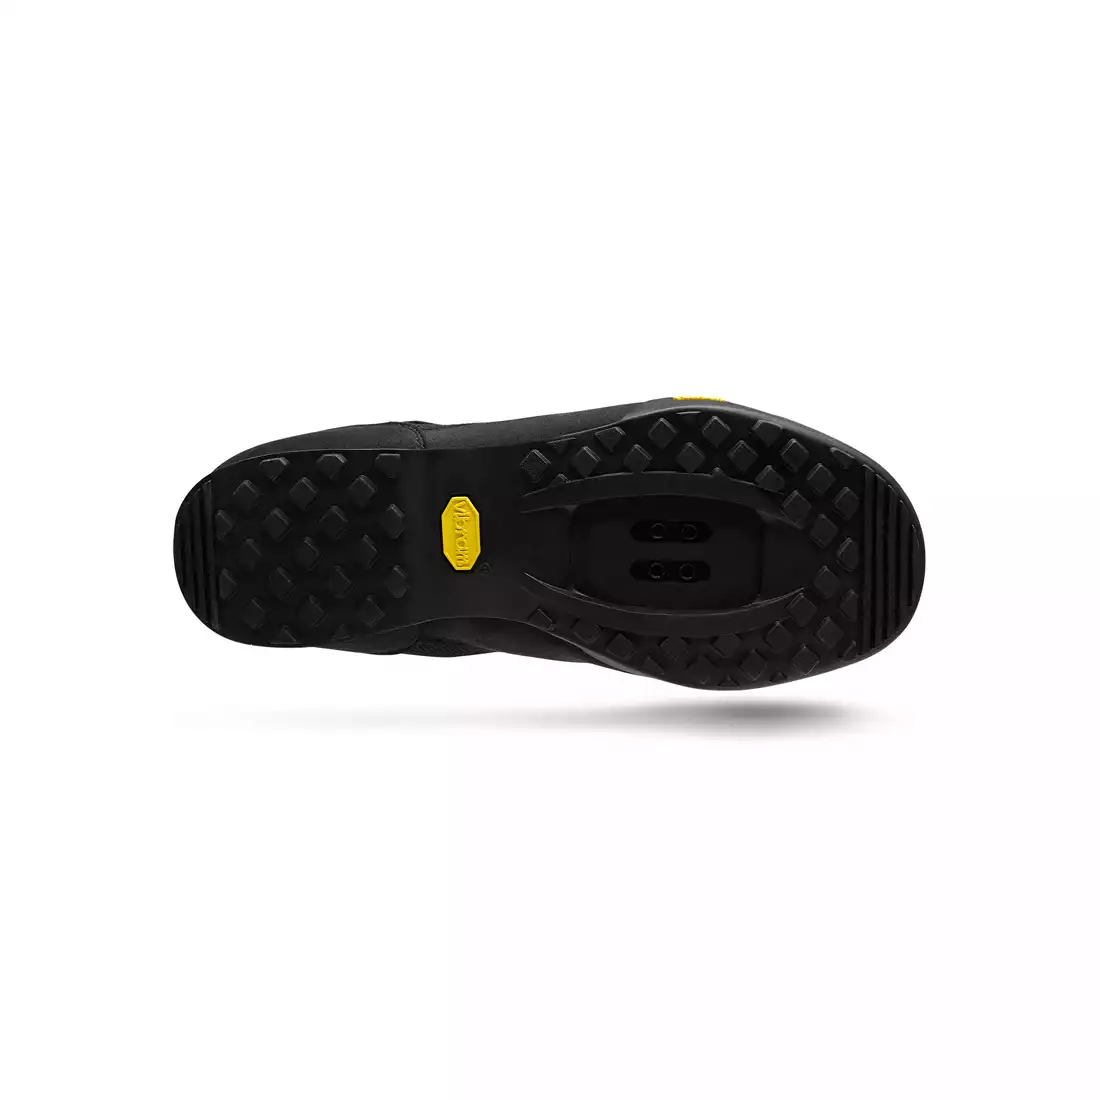 GIRO RUMBLE VR - Men's MTB, trekking bike shoes black